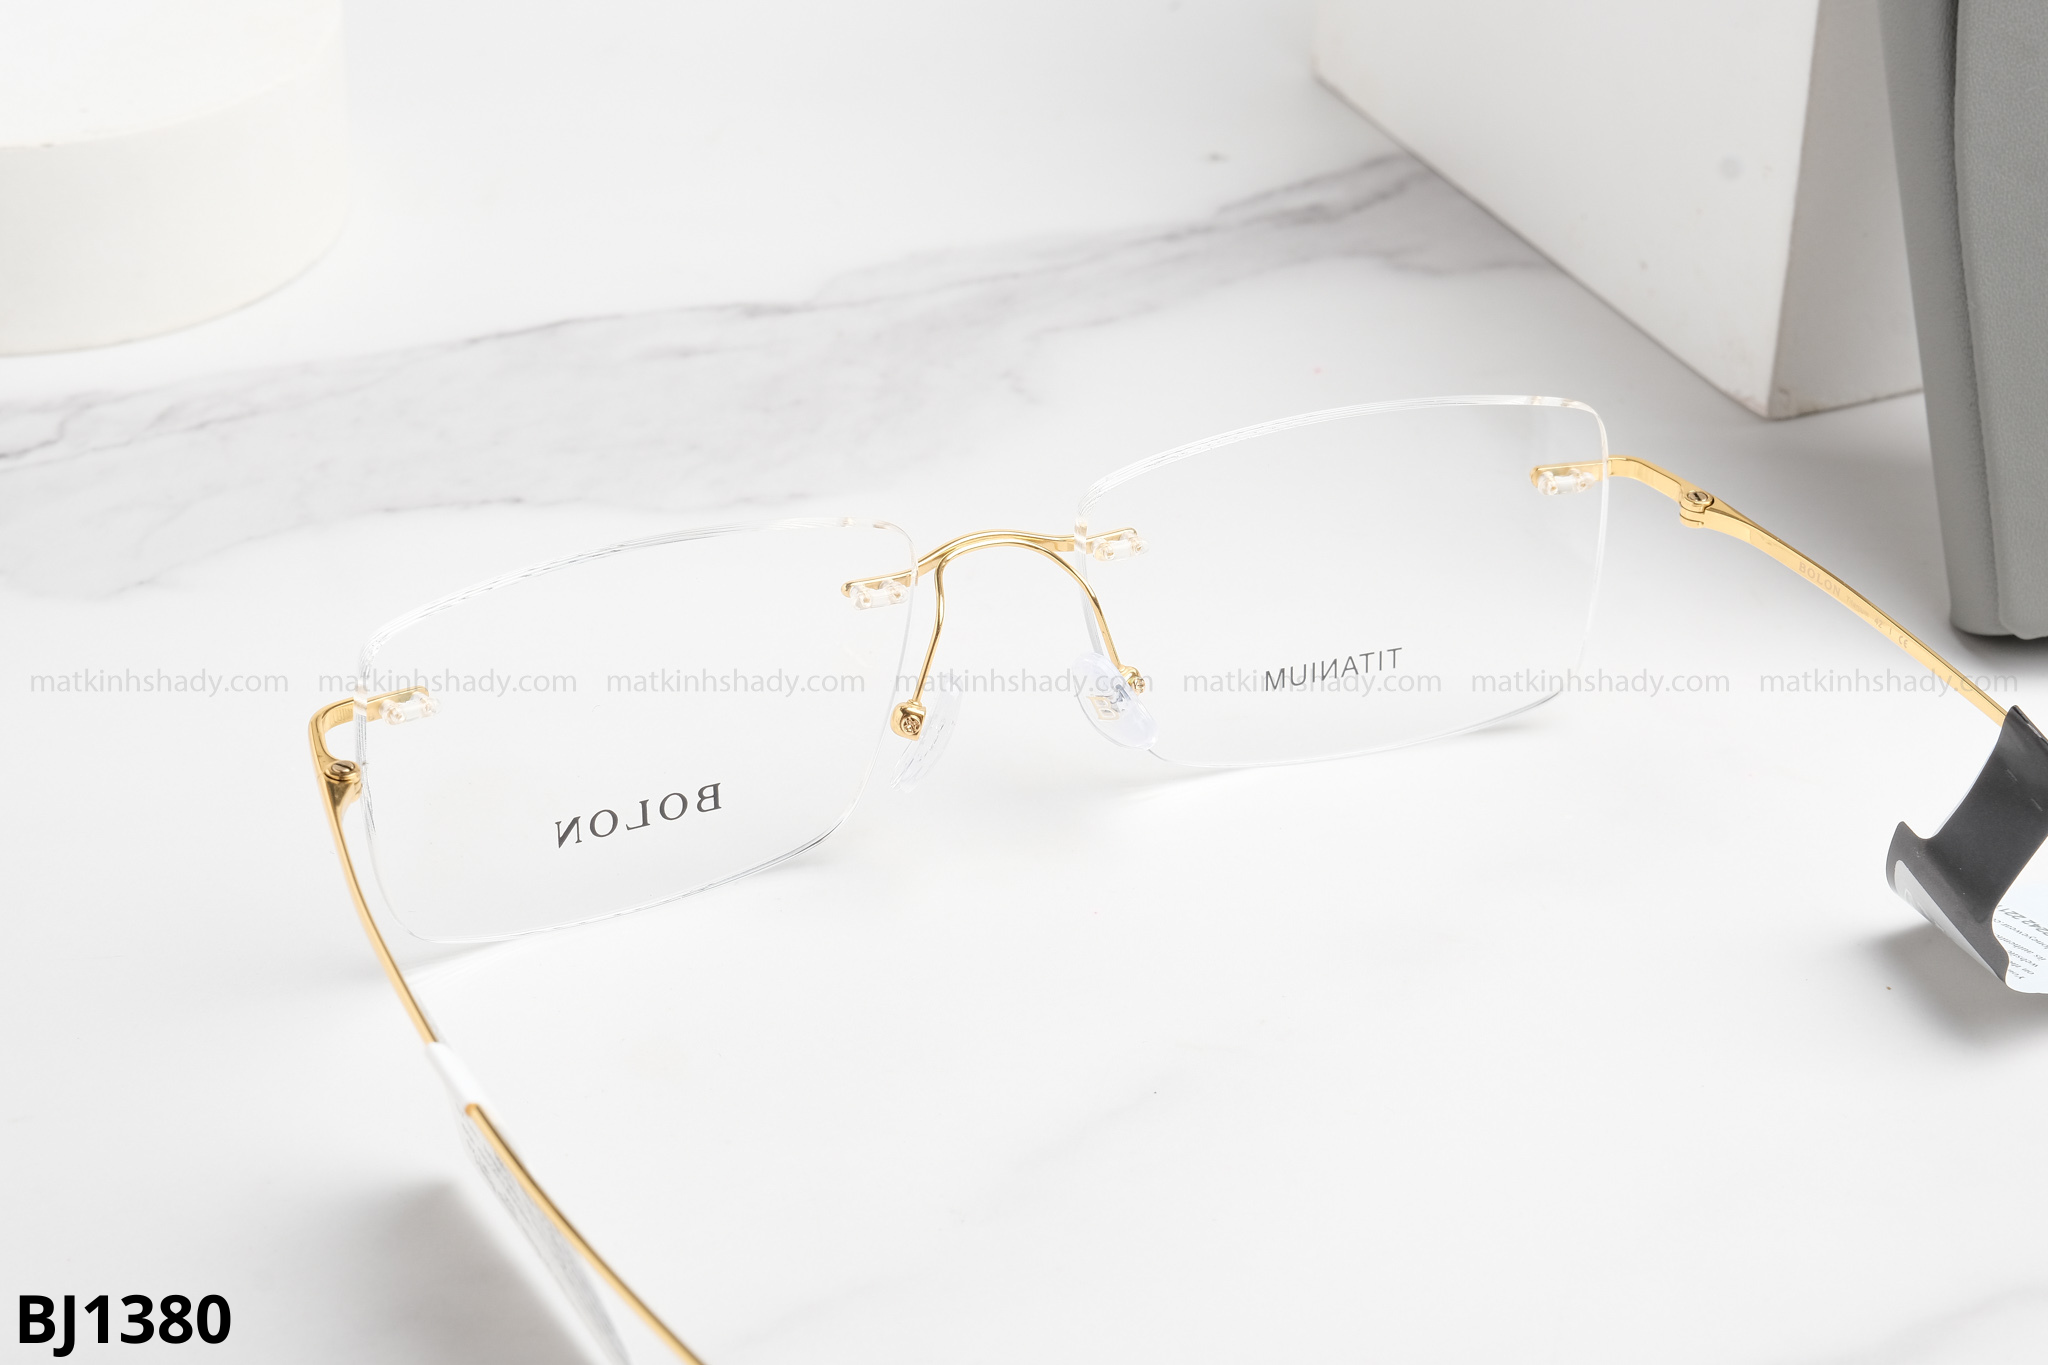  Bolon Eyewear - Glasses - BJ1380 